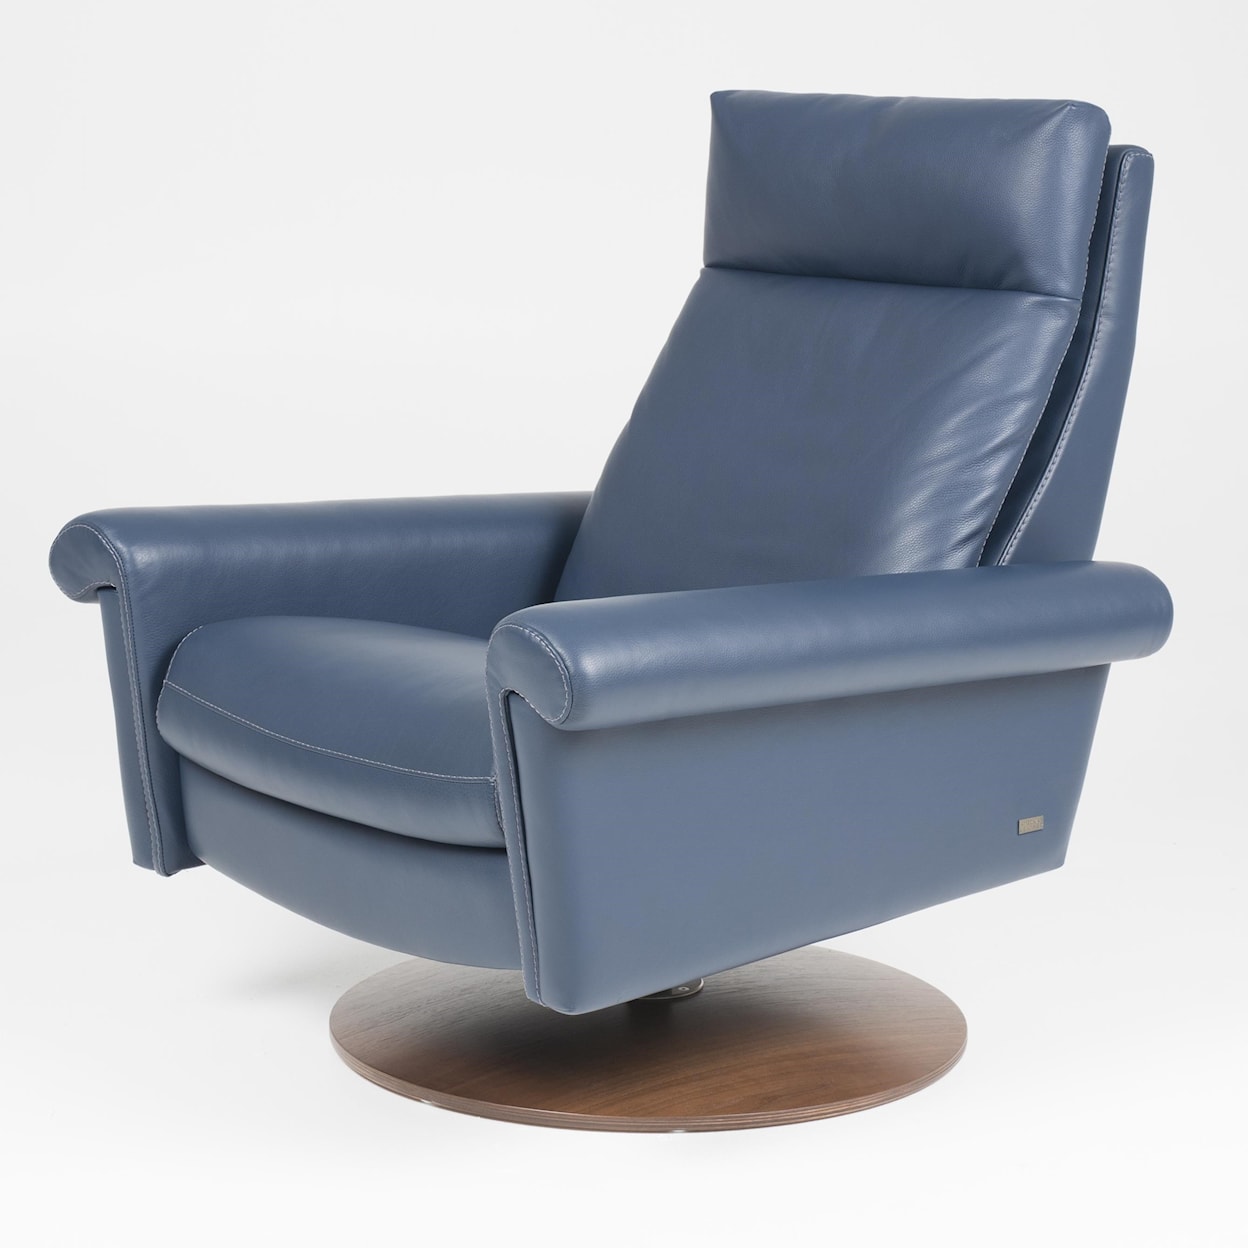 American Leather Nimbus Swivel Glider Reclining Chair - XL Size